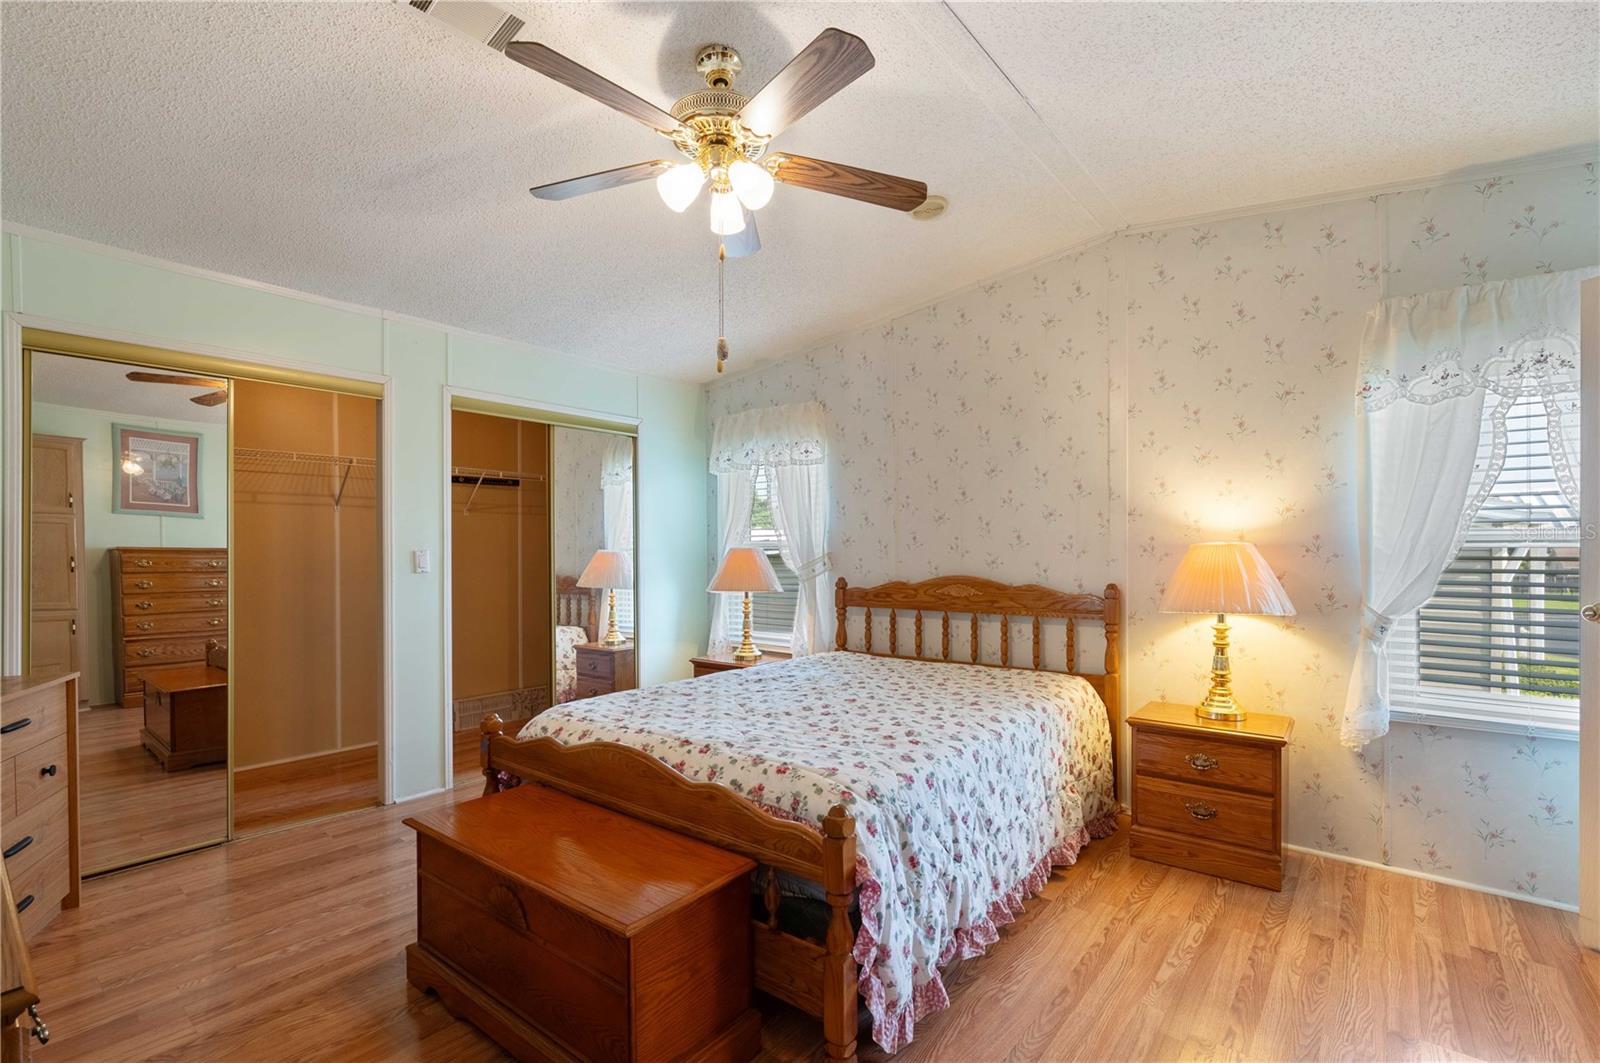 Master bedroom has laminate flooring, ceiling fan, walk-in closet, and plenty of windows.